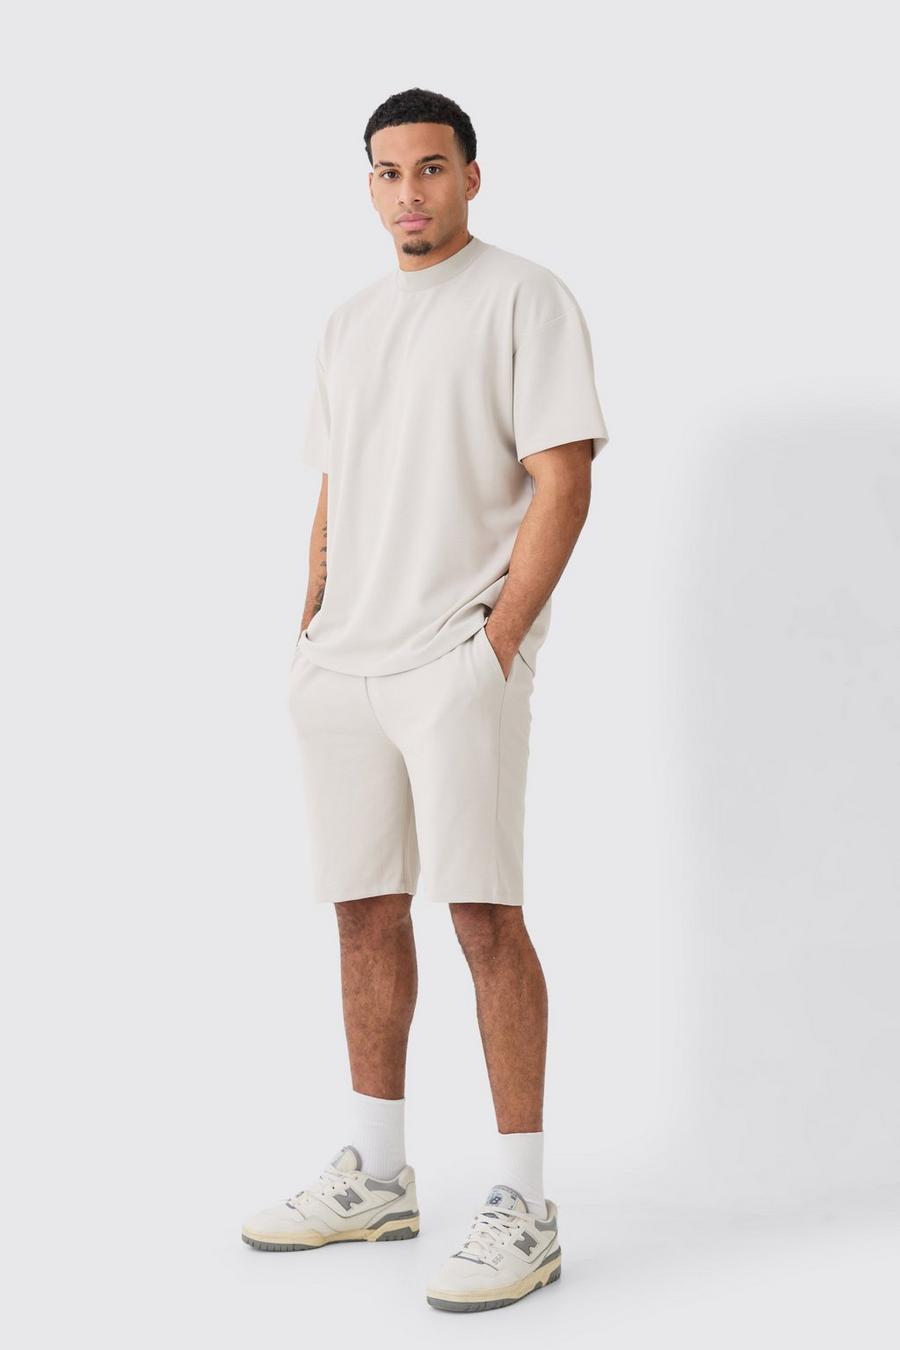 Sand Premium Oversize t-shirt och shorts i supertjockt tyg